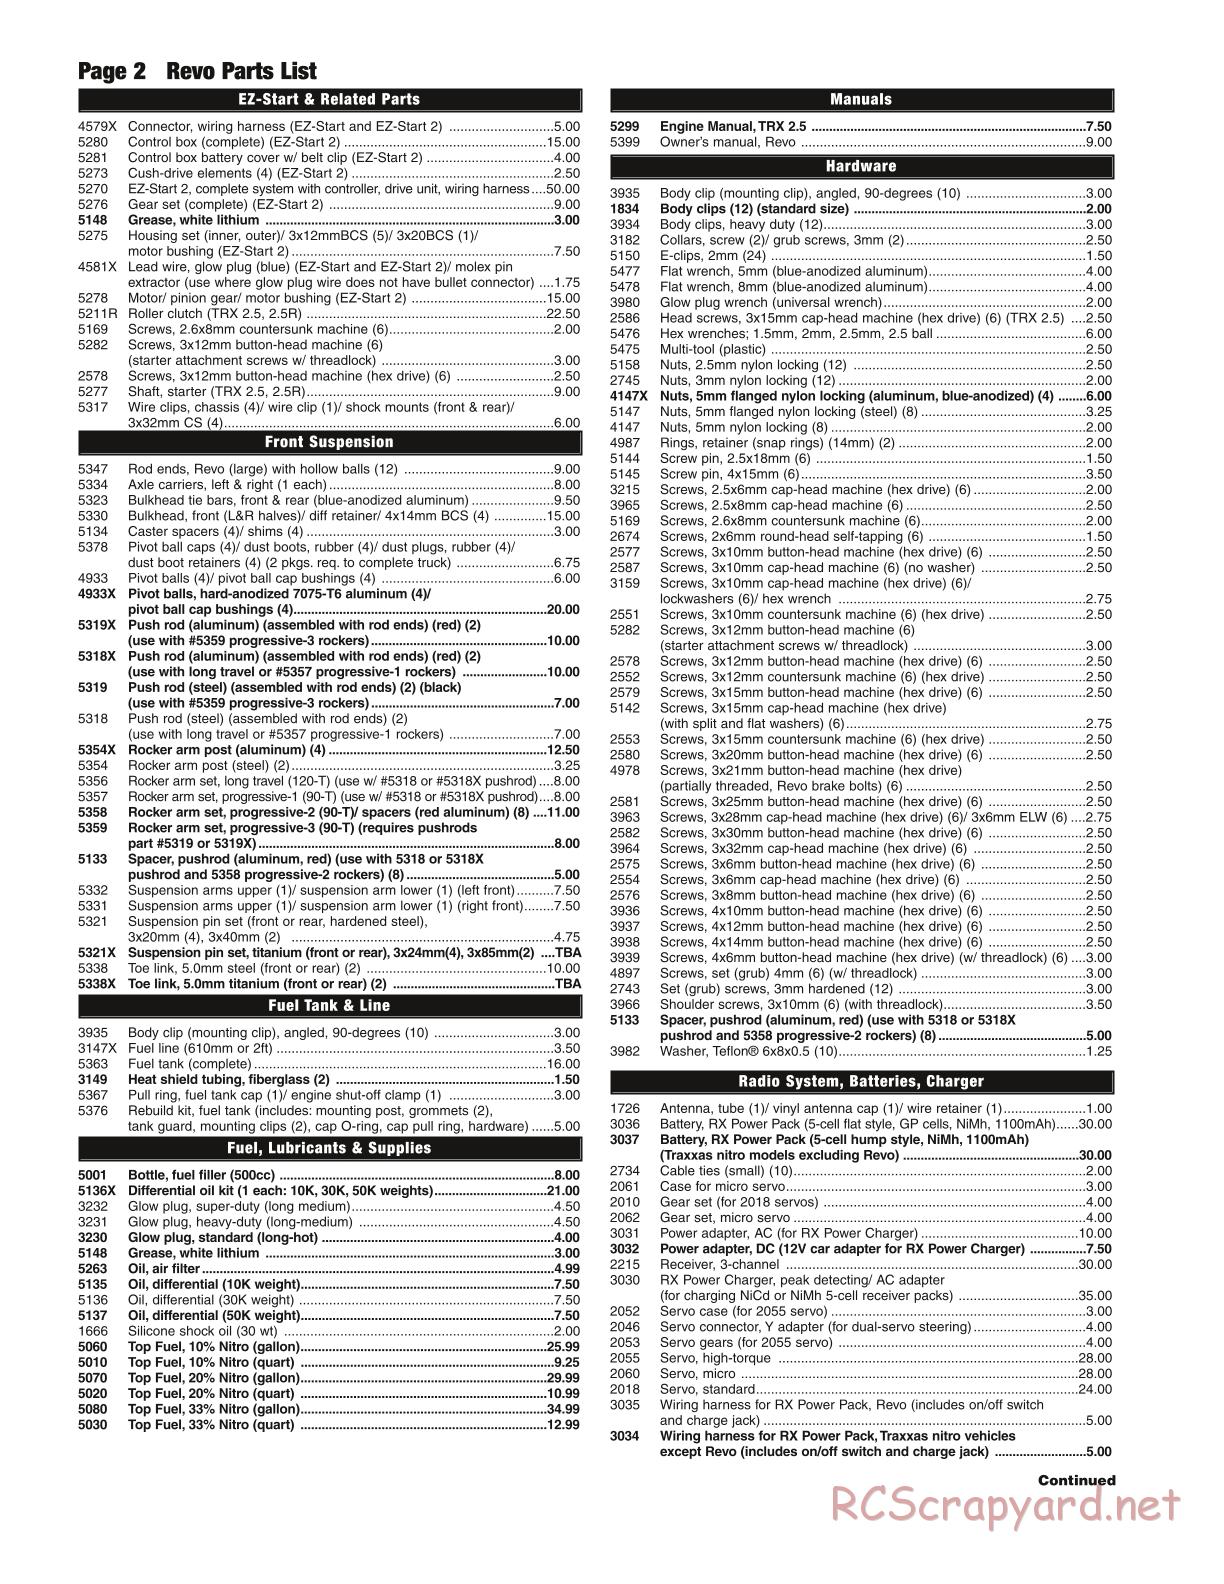 Traxxas - Revo 2.5R (2004) - Parts List - Page 2